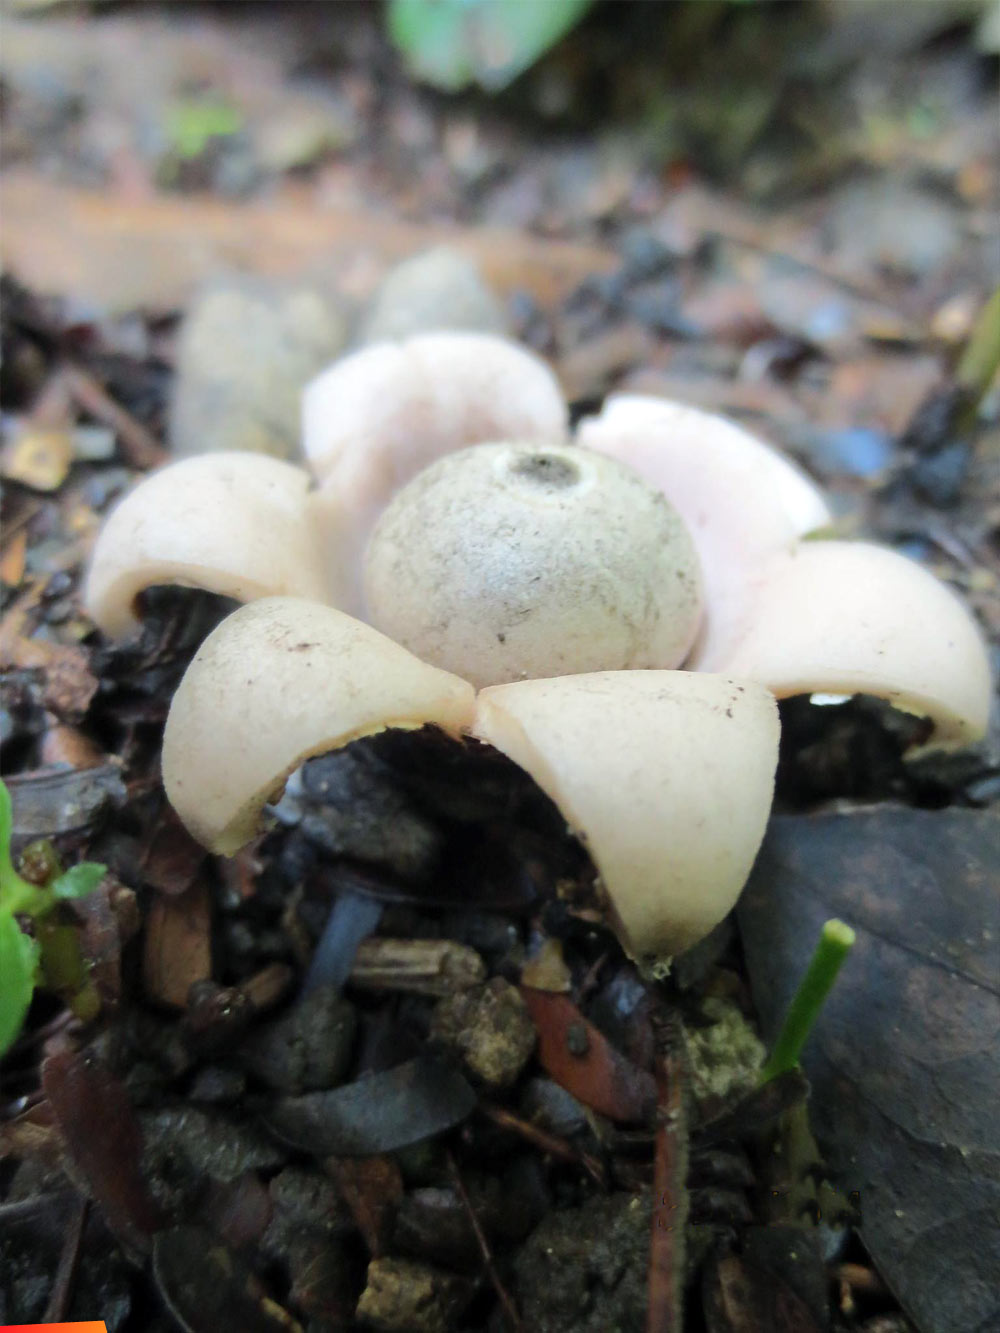 An earthstar (Geastrum) puffball, growing on moist soil among mosses